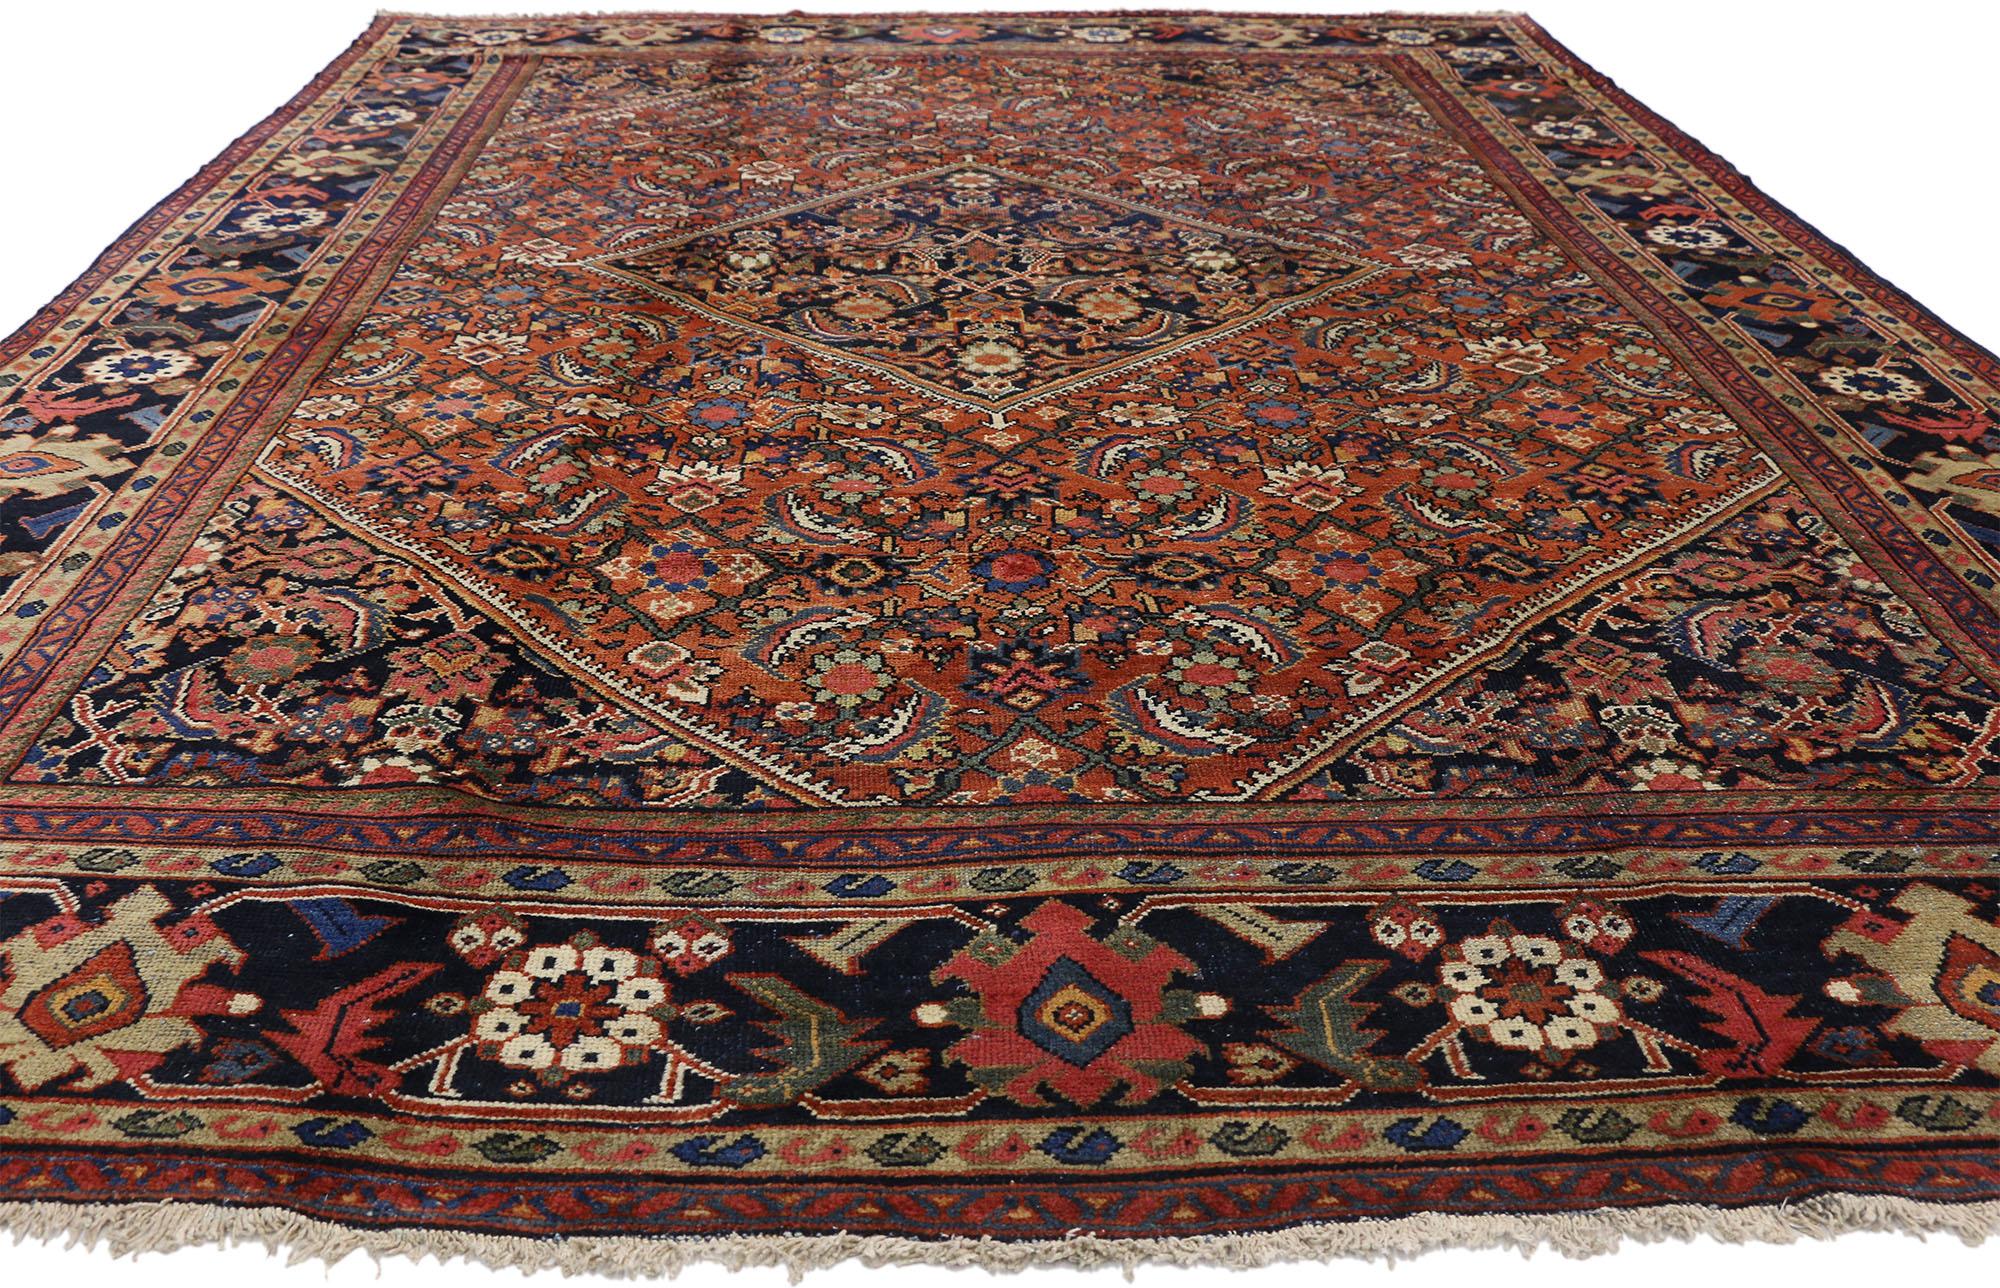 colonial antiques & persian carpets photos